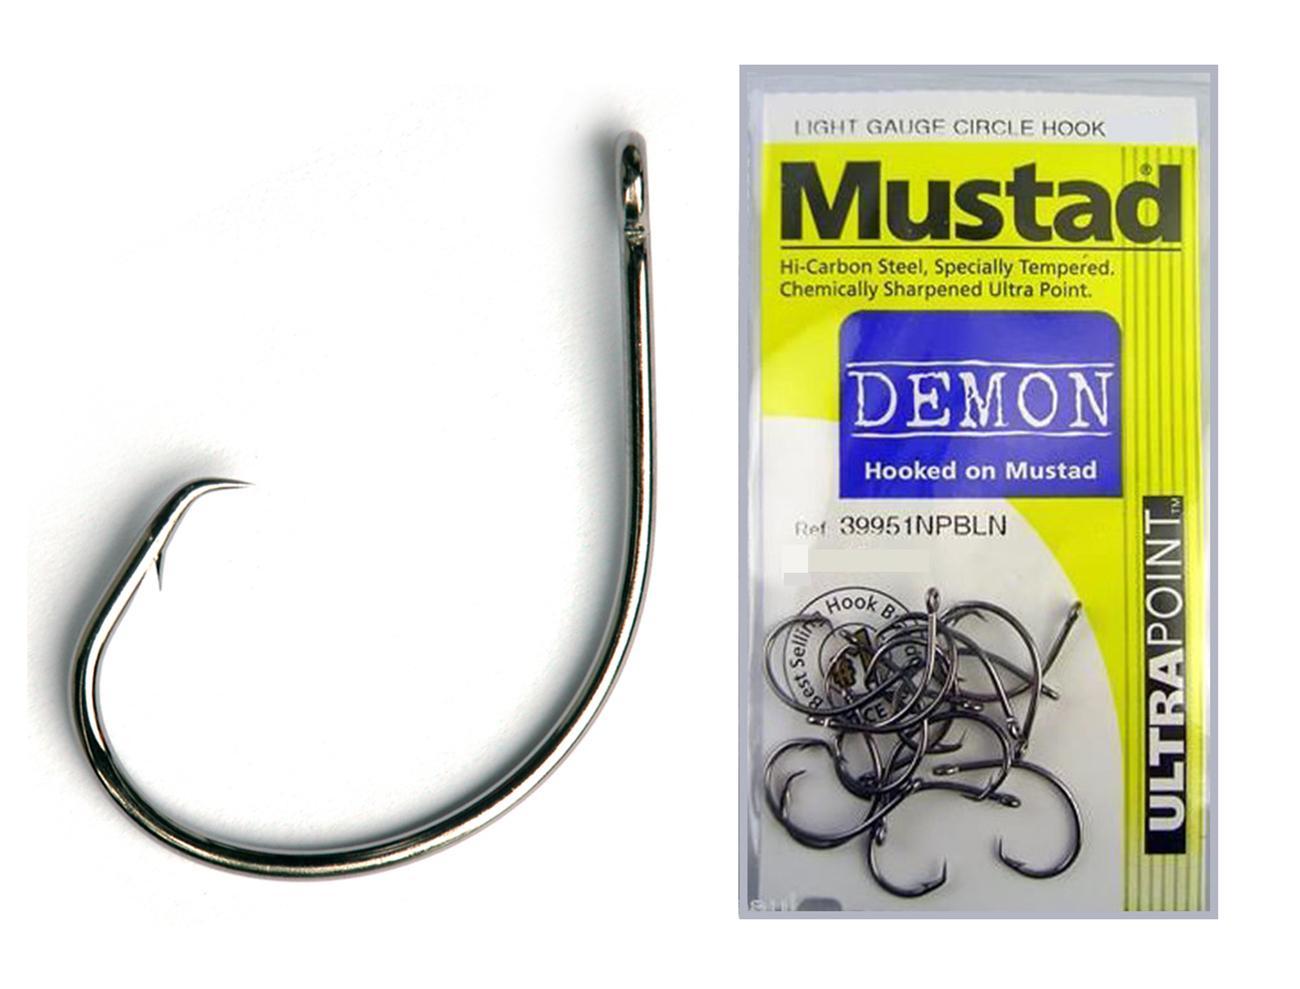 1 Packet of Mustad 39951NPBLN Demon Circle Light Chemically Sharp Fishing  Hooks